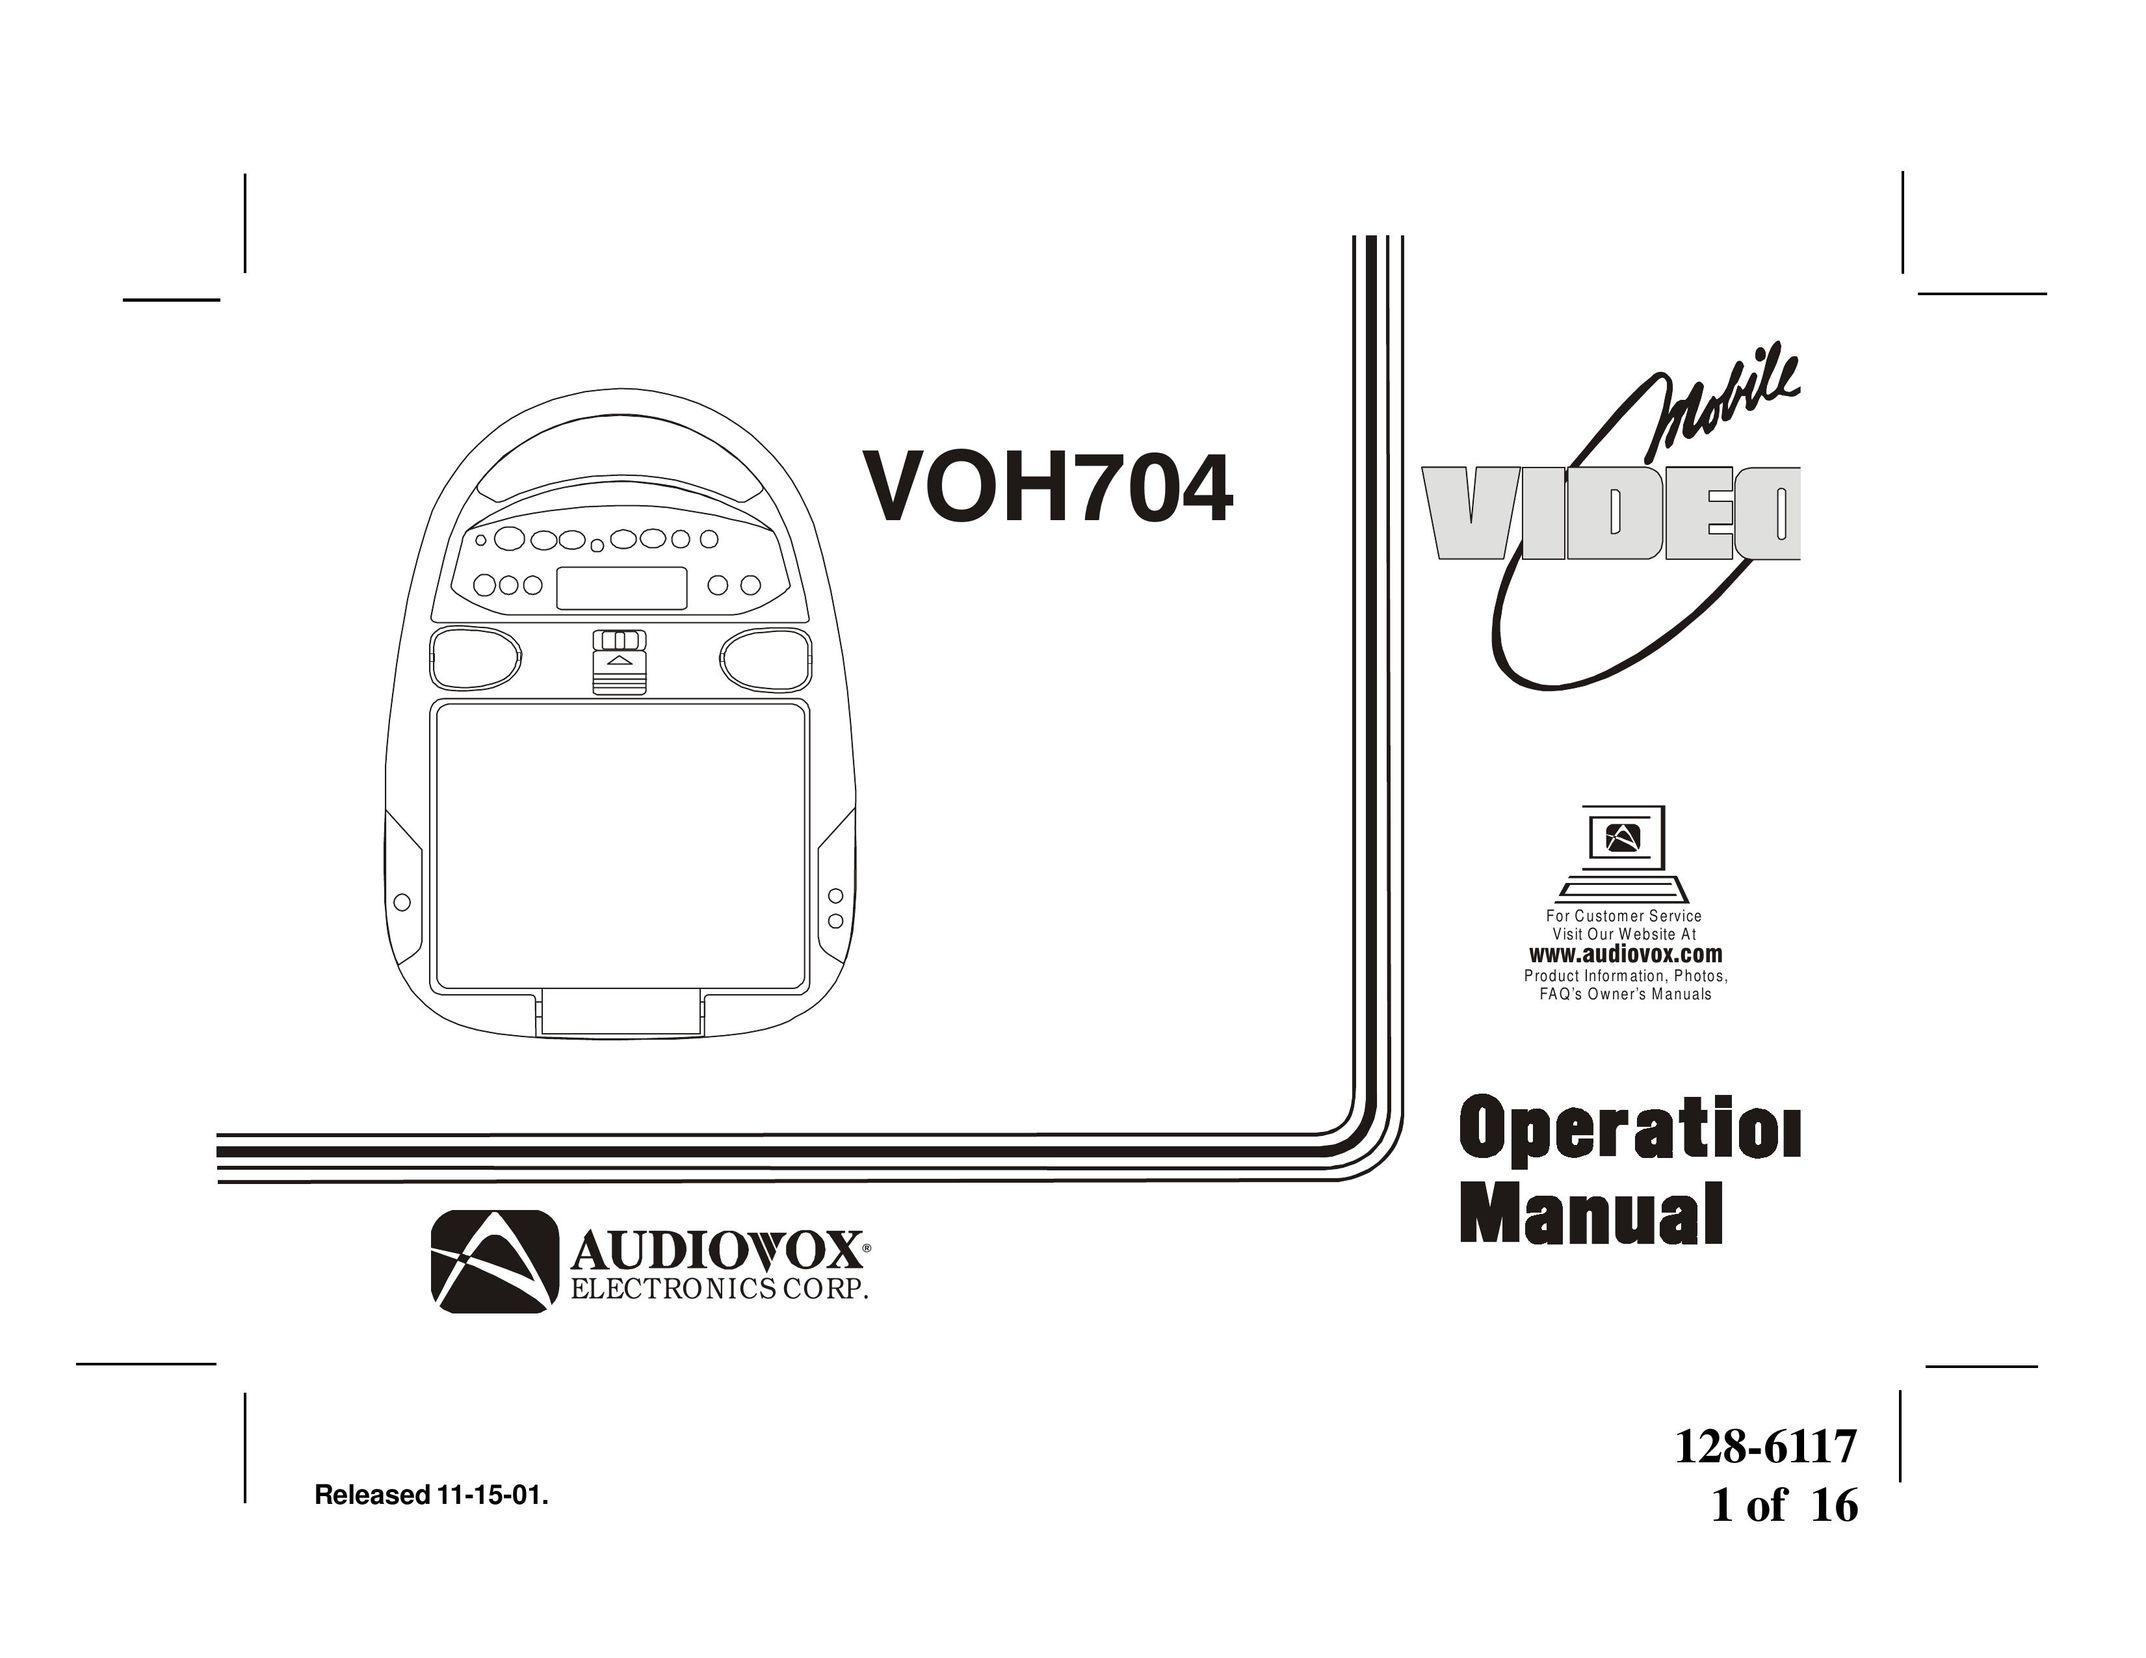 Audiovox VOH704 Computer Monitor User Manual